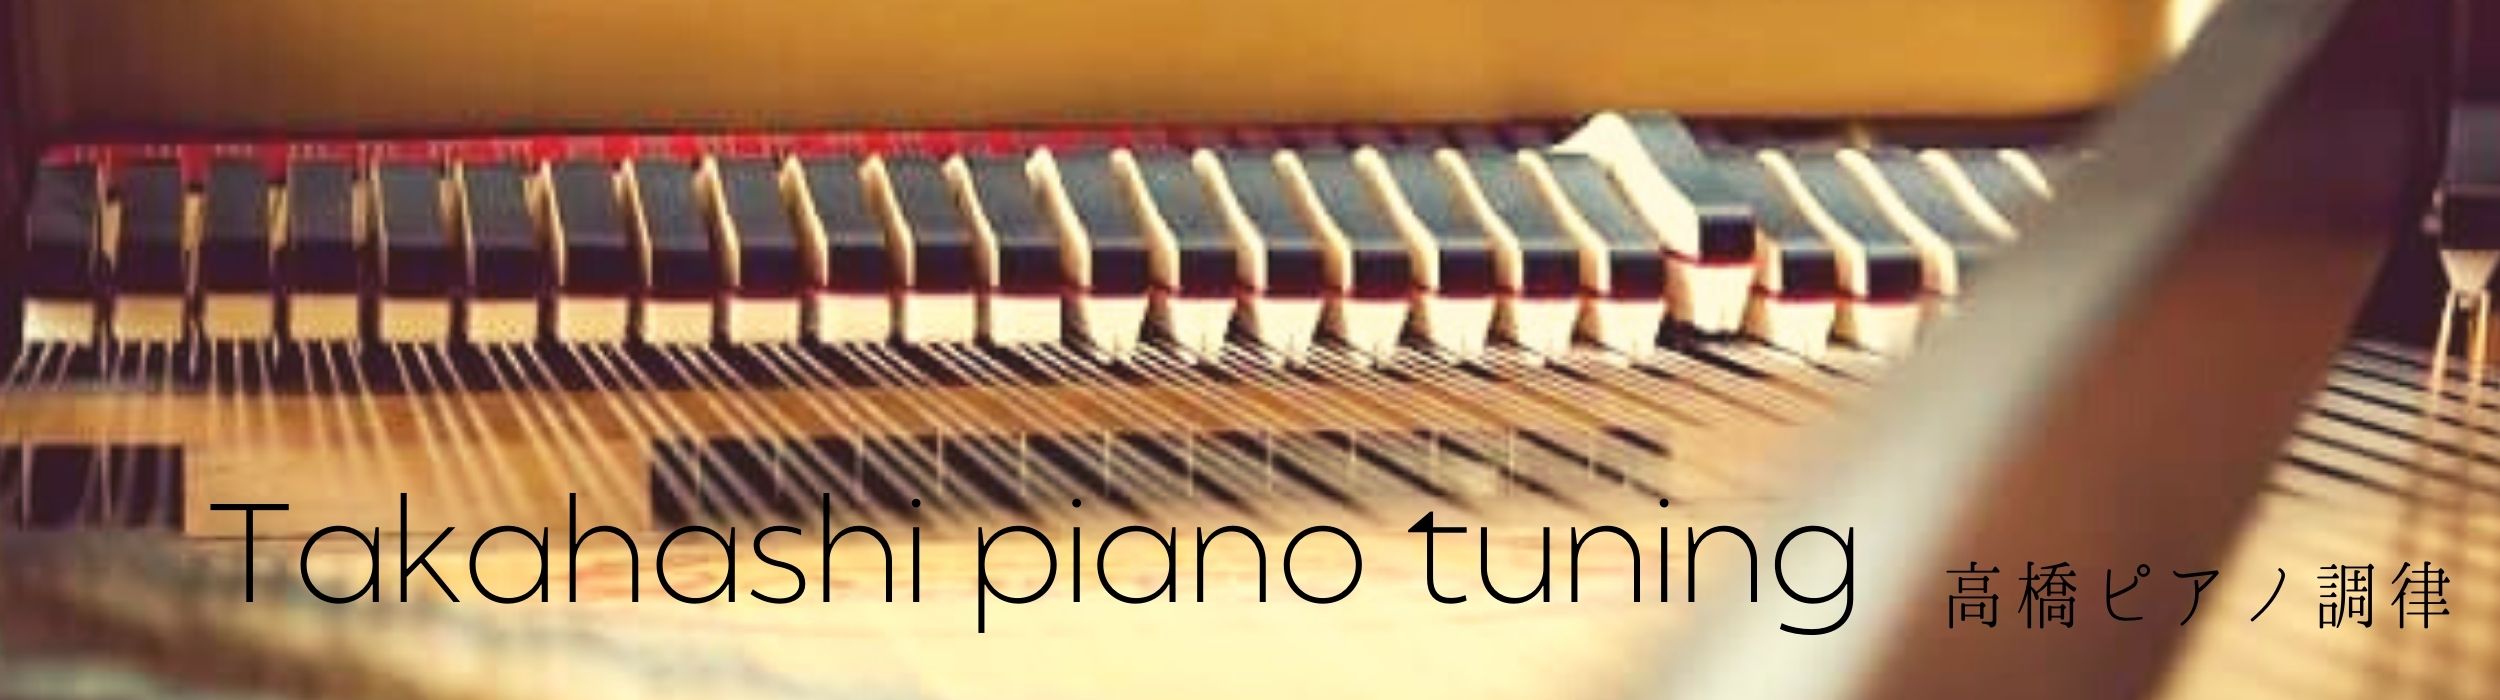 Takahashi piano tuning